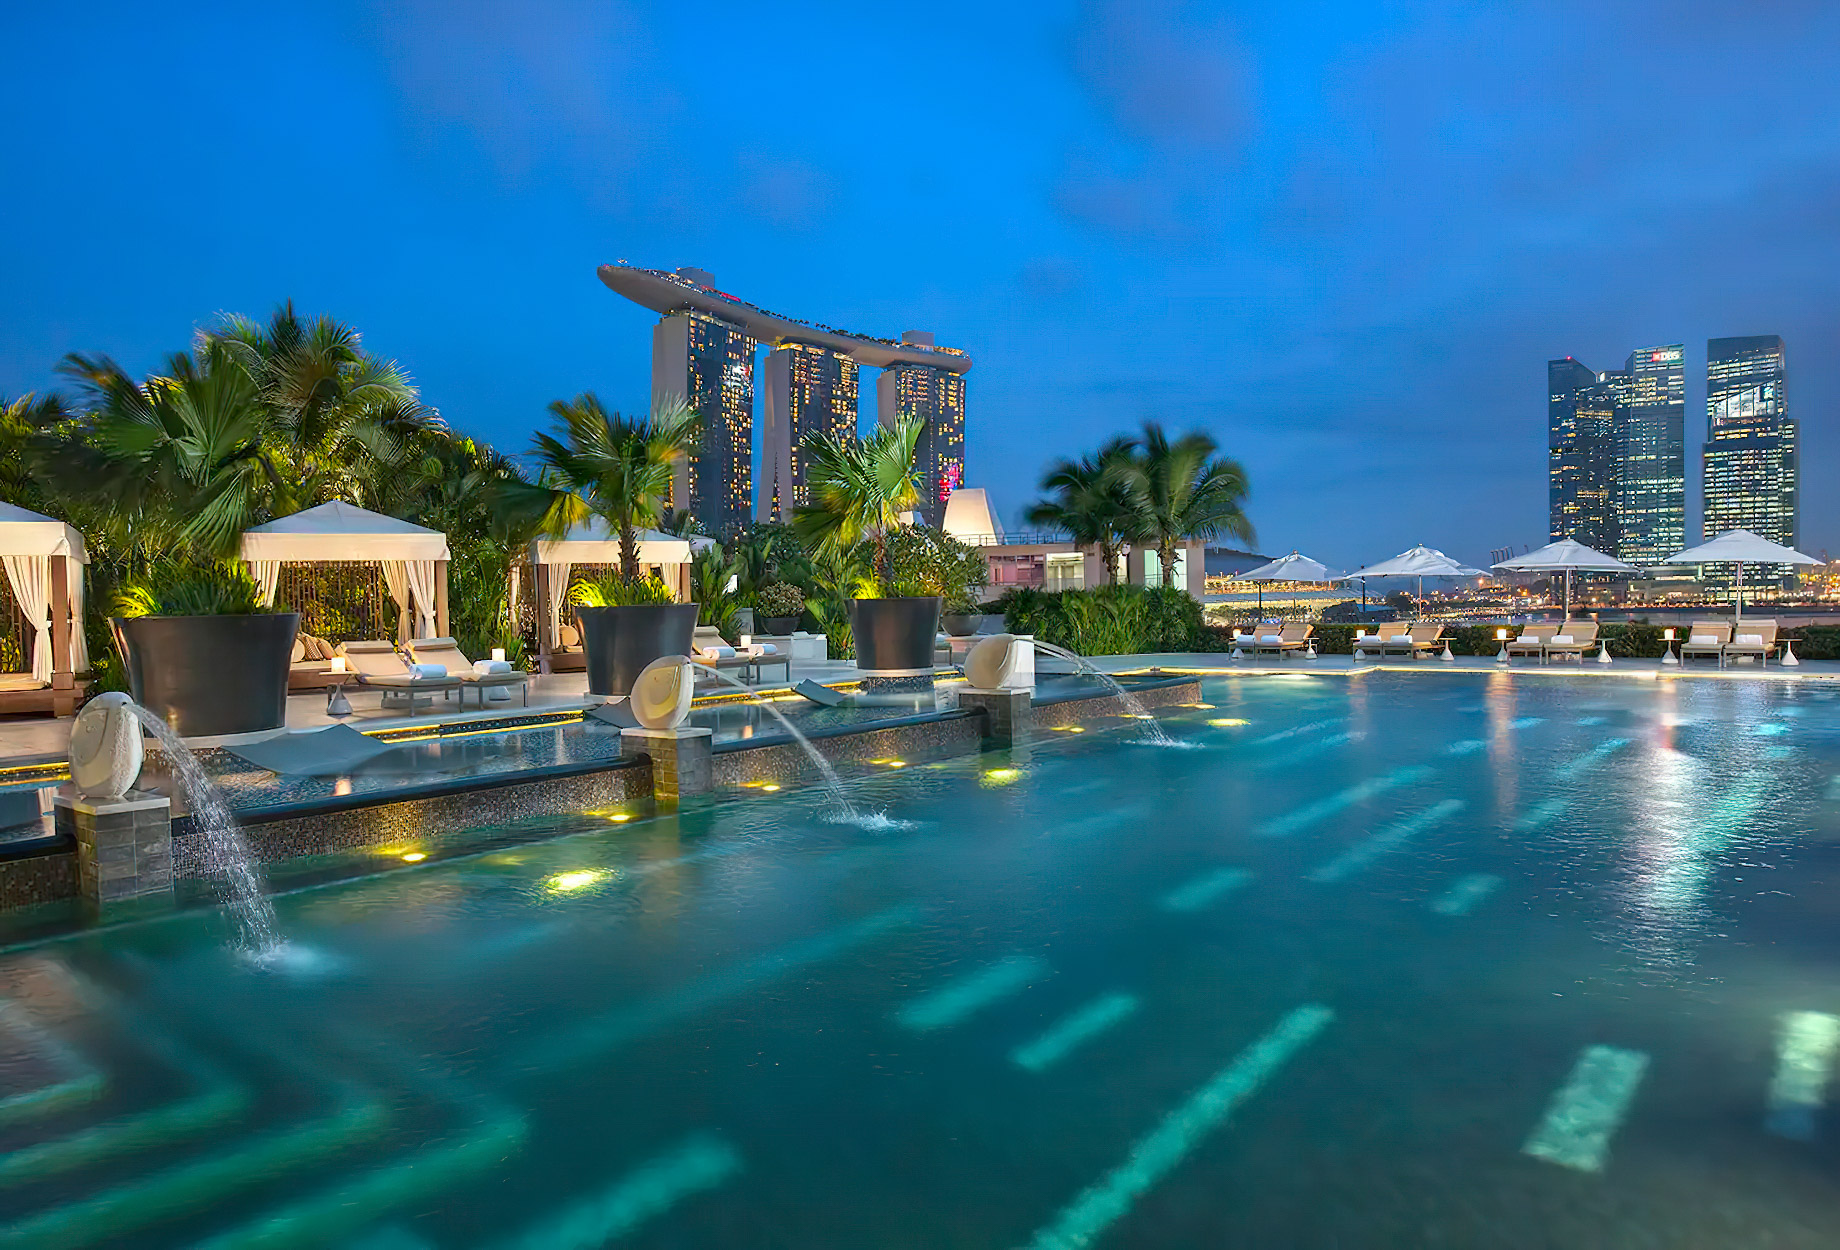 Mandarin Oriental, Singapore Hotel – Singapore – Exterior Pool Night